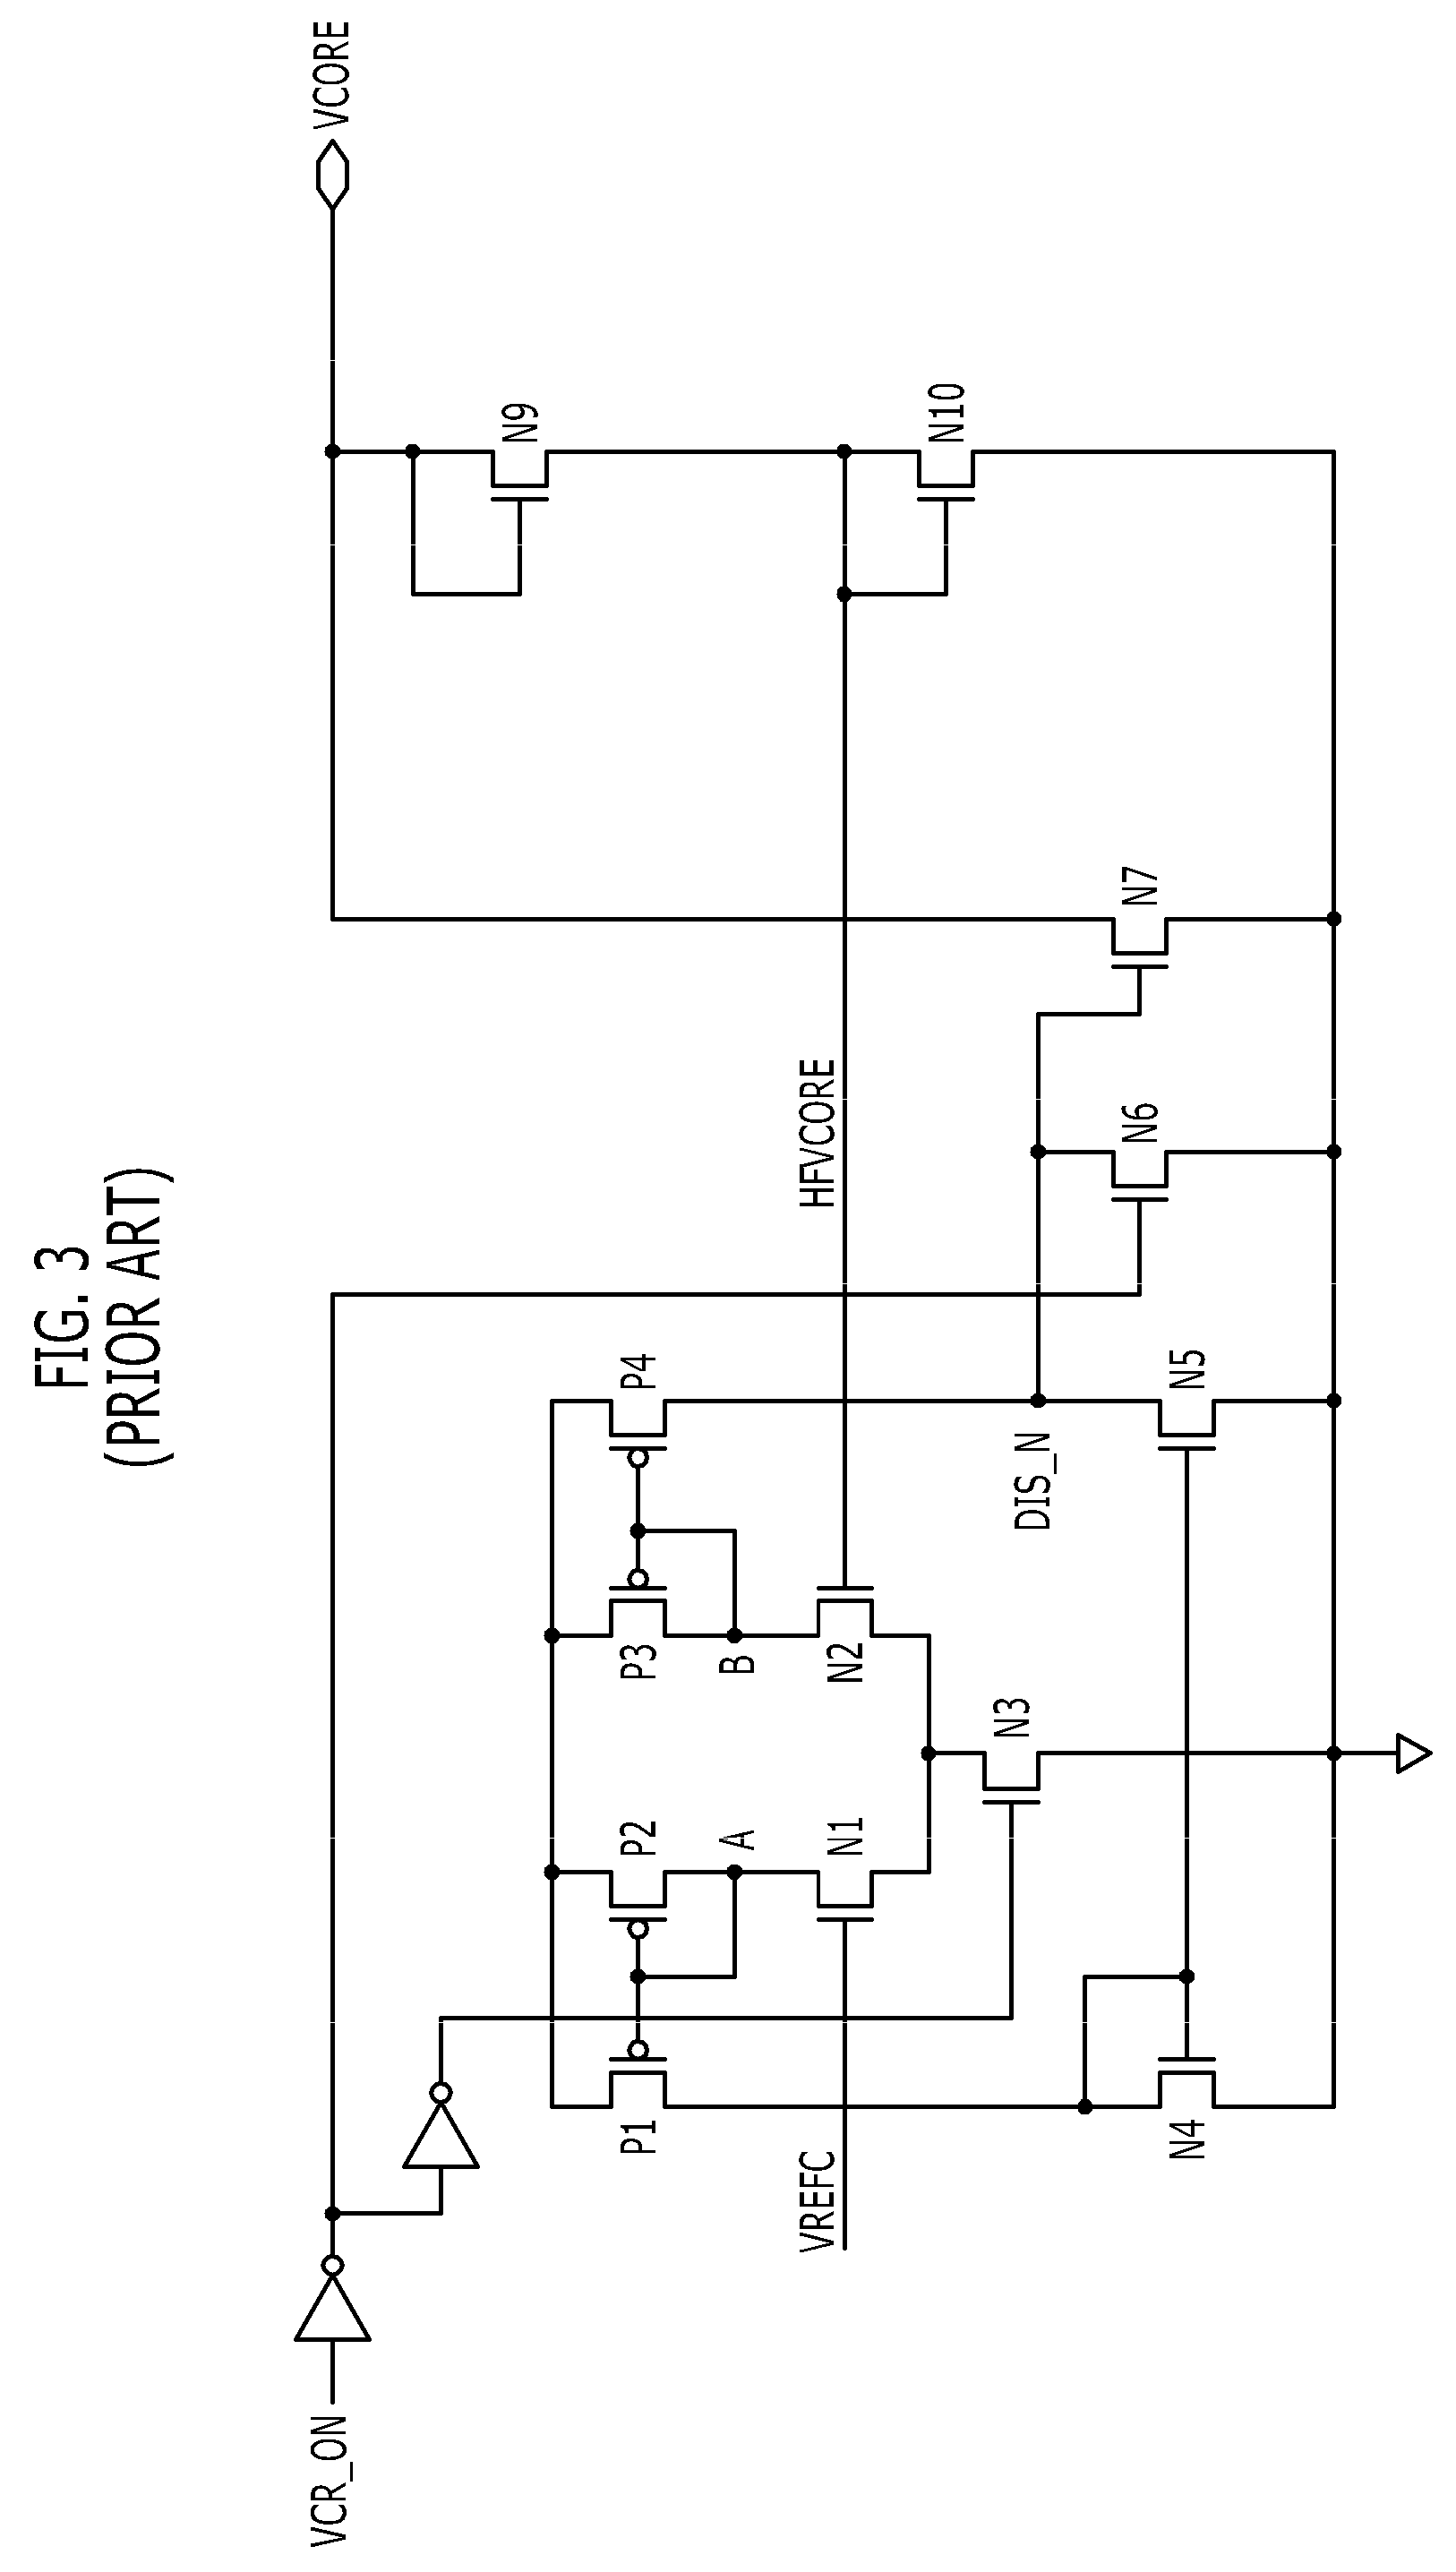 Sense amplifier driving control circuit and method